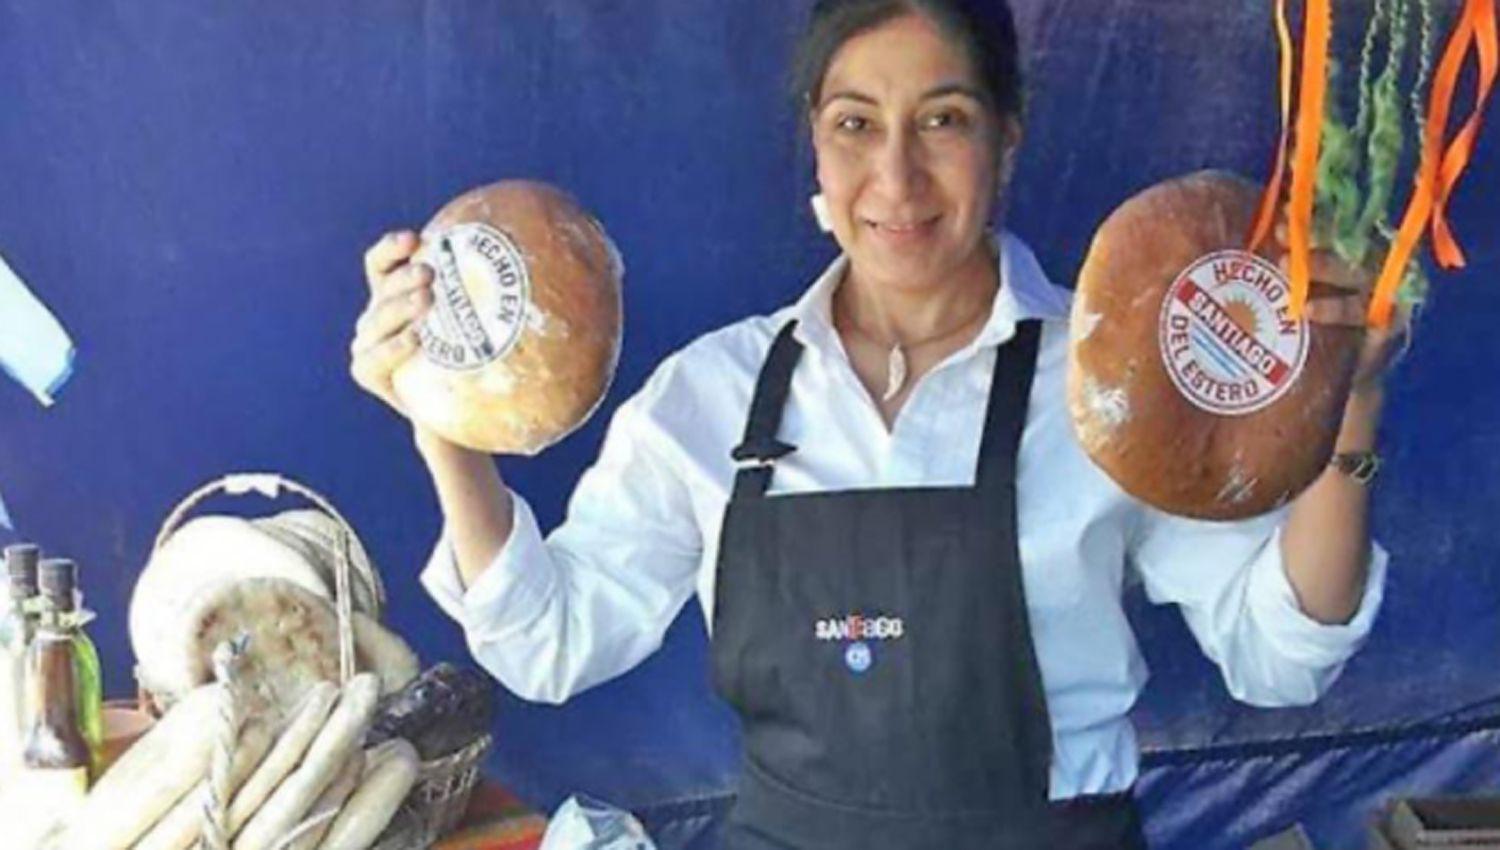 VIDEO  Berta Ruiz la cocinera y emprendedora santiaguentildea que Netflix podriacutea elegir para el documental ldquoLa ruta de la empanadardquo